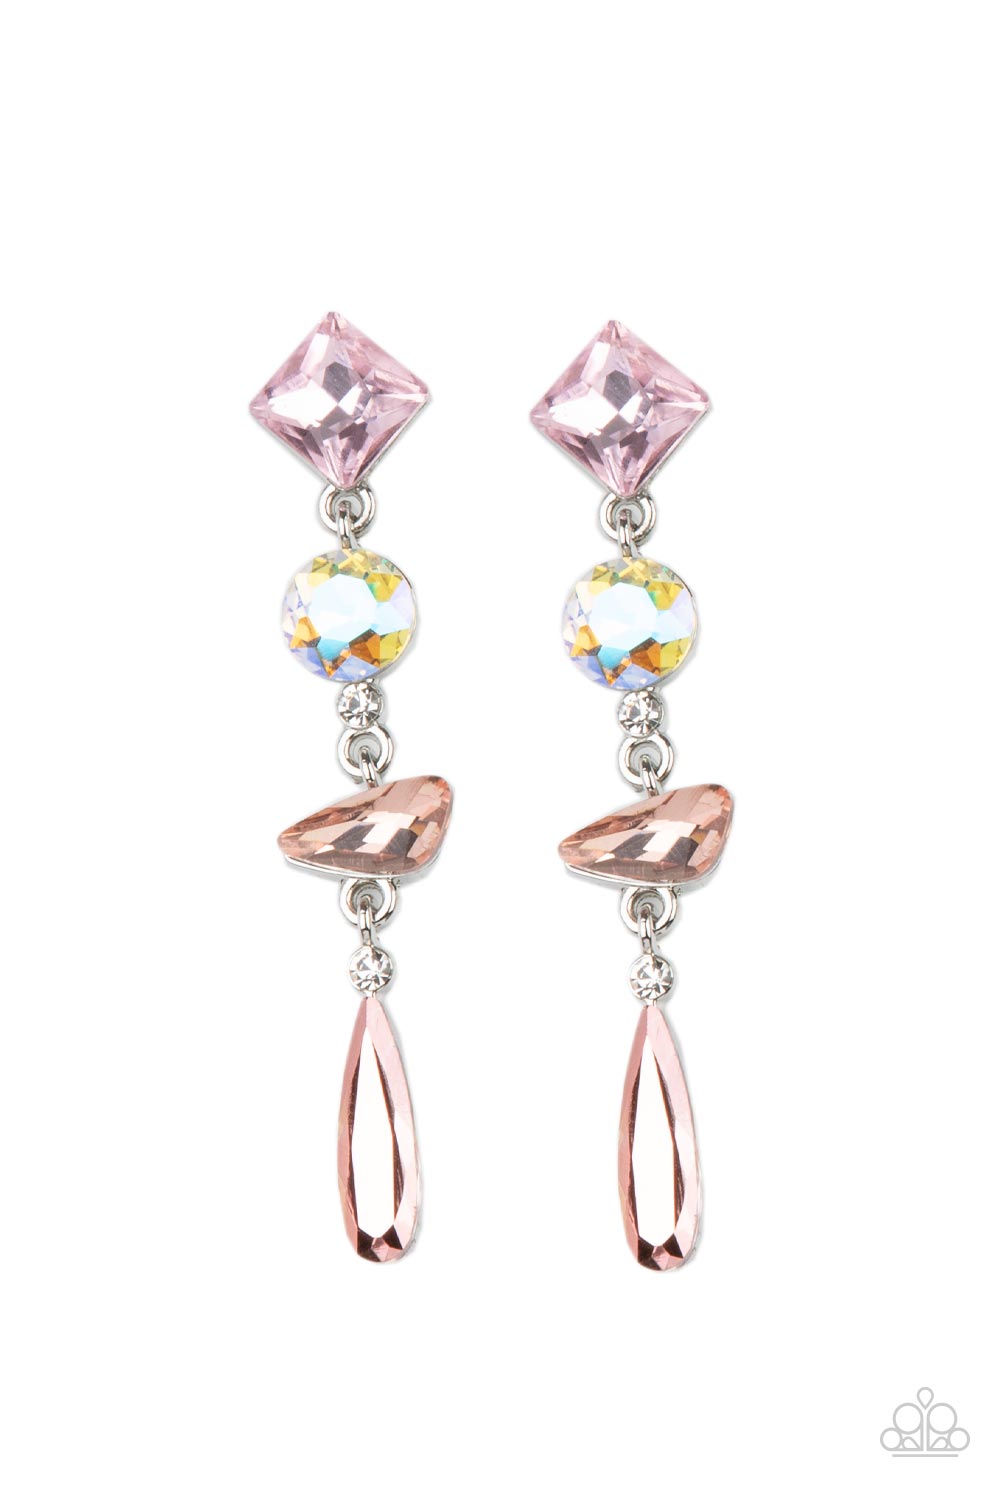 Rock Candy Elegance Pink Iridescent Rhinestone Earrings - Paparazzi Accessories - lightbox -CarasShop.com - $5 Jewelry by Cara Jewels